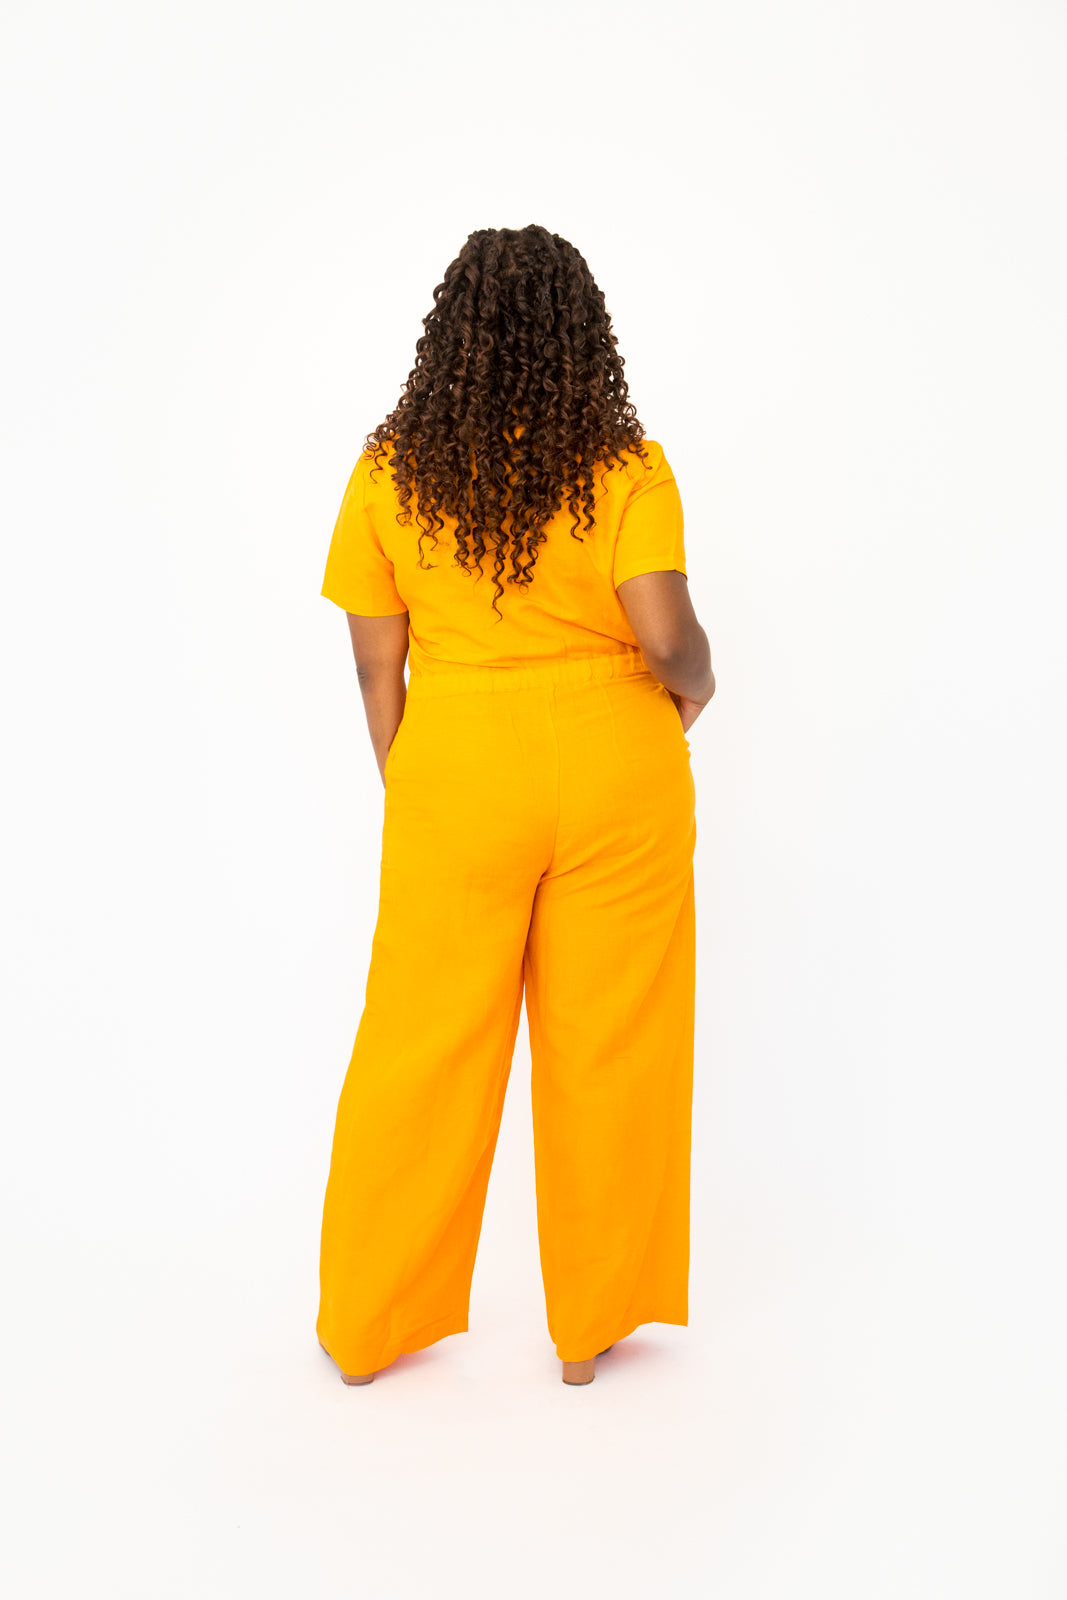 Tangerine Linen Jumpsuit